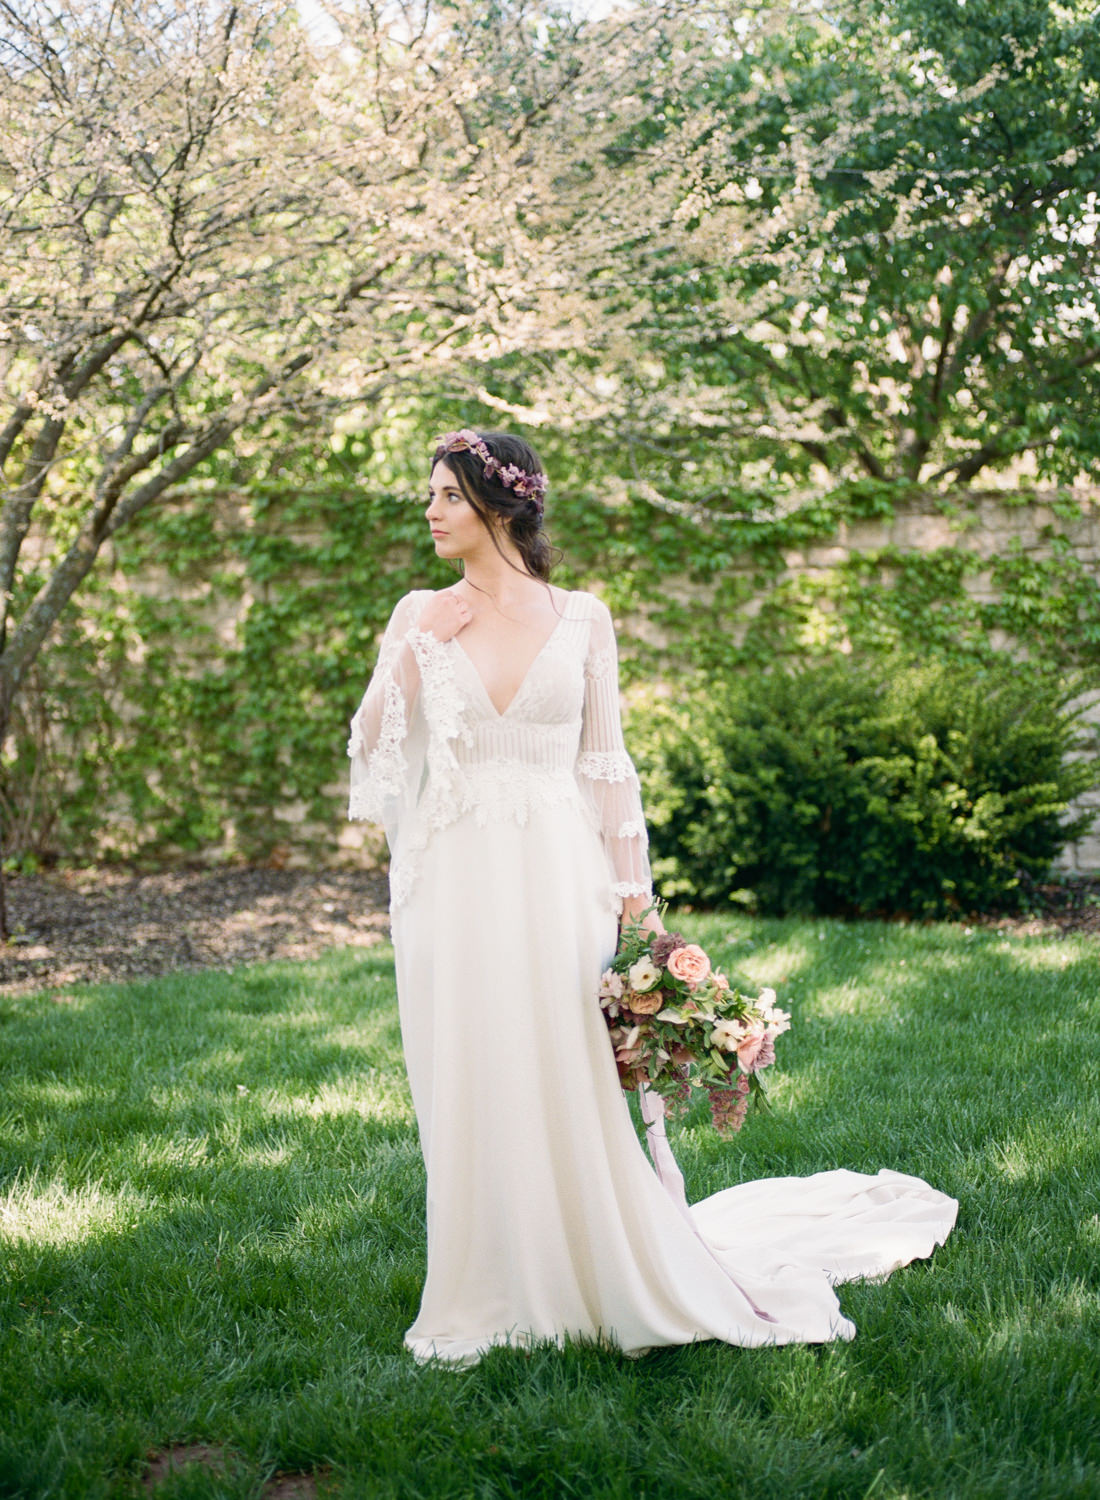 Claire Pettibone Wedding Dress, Bride at Haseltine Estate, St Louis Fine Art Film Wedding Photographer Erica Robnett Photography